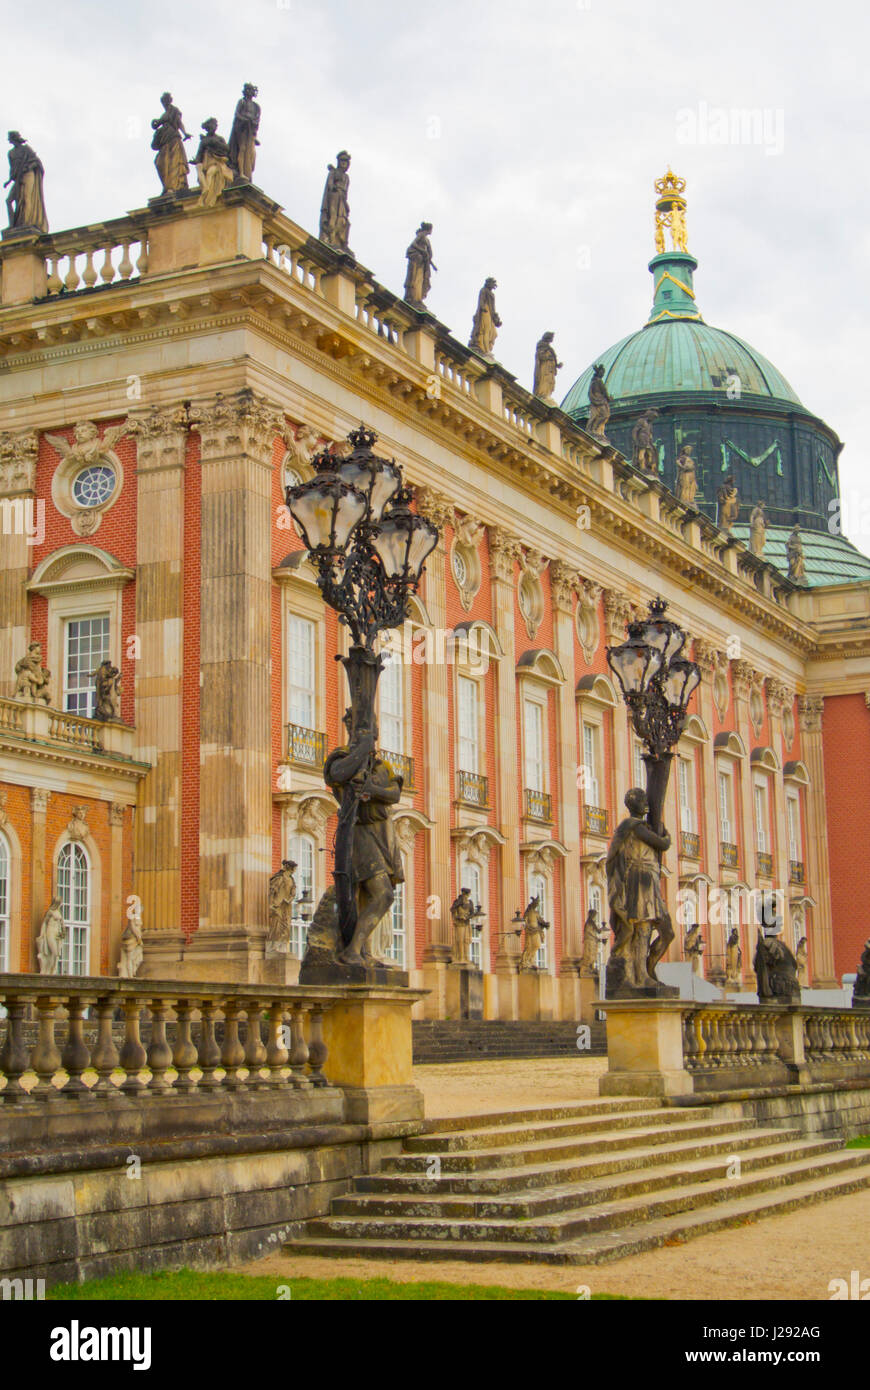 Neues Palais, new Palace, Park Sanssouci, Potsdam, near Berlin, Germany Stock Photo